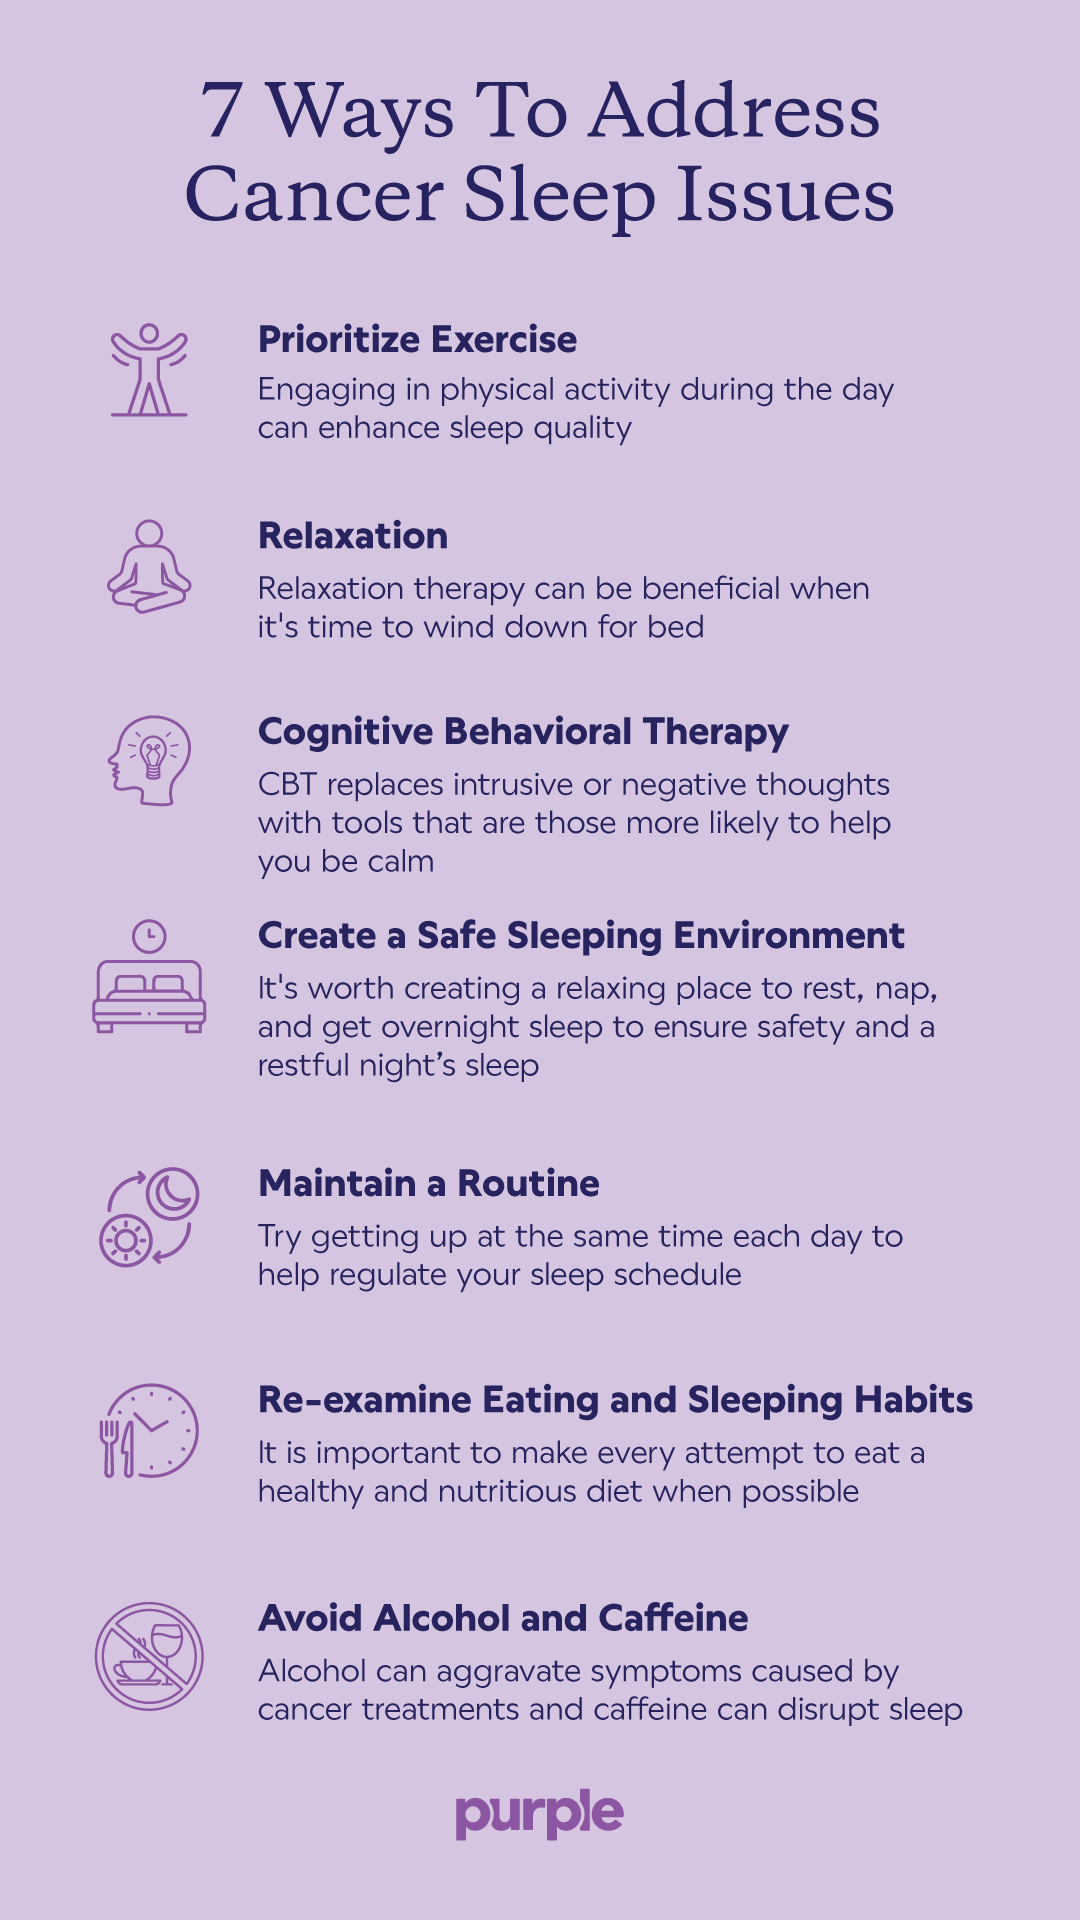 7 ways to address cancer sleep issues